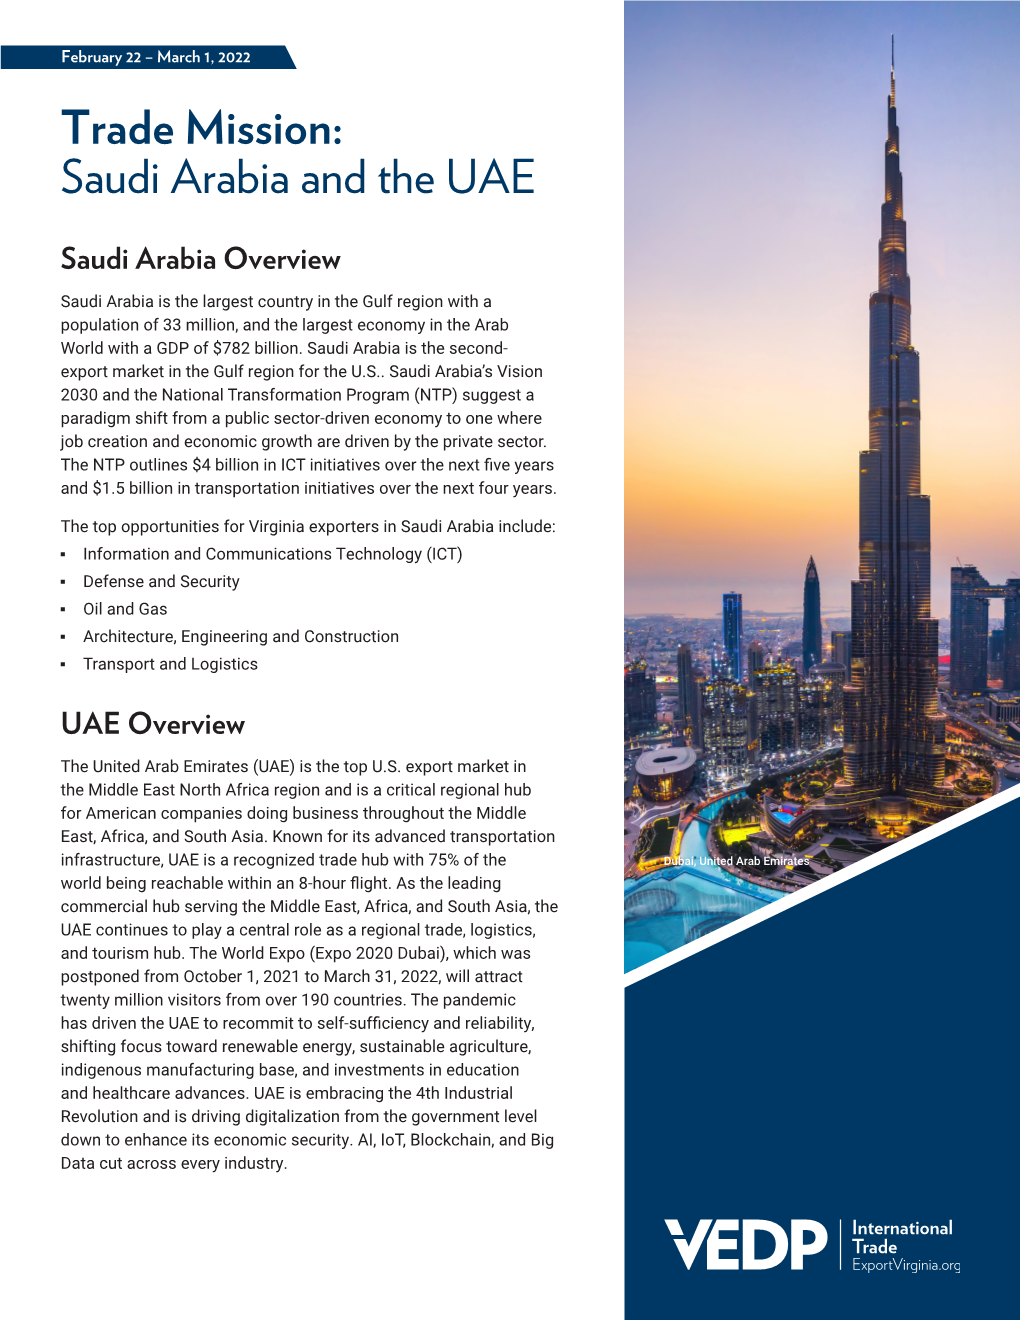 Trade Mission: Saudi Arabia and the UAE